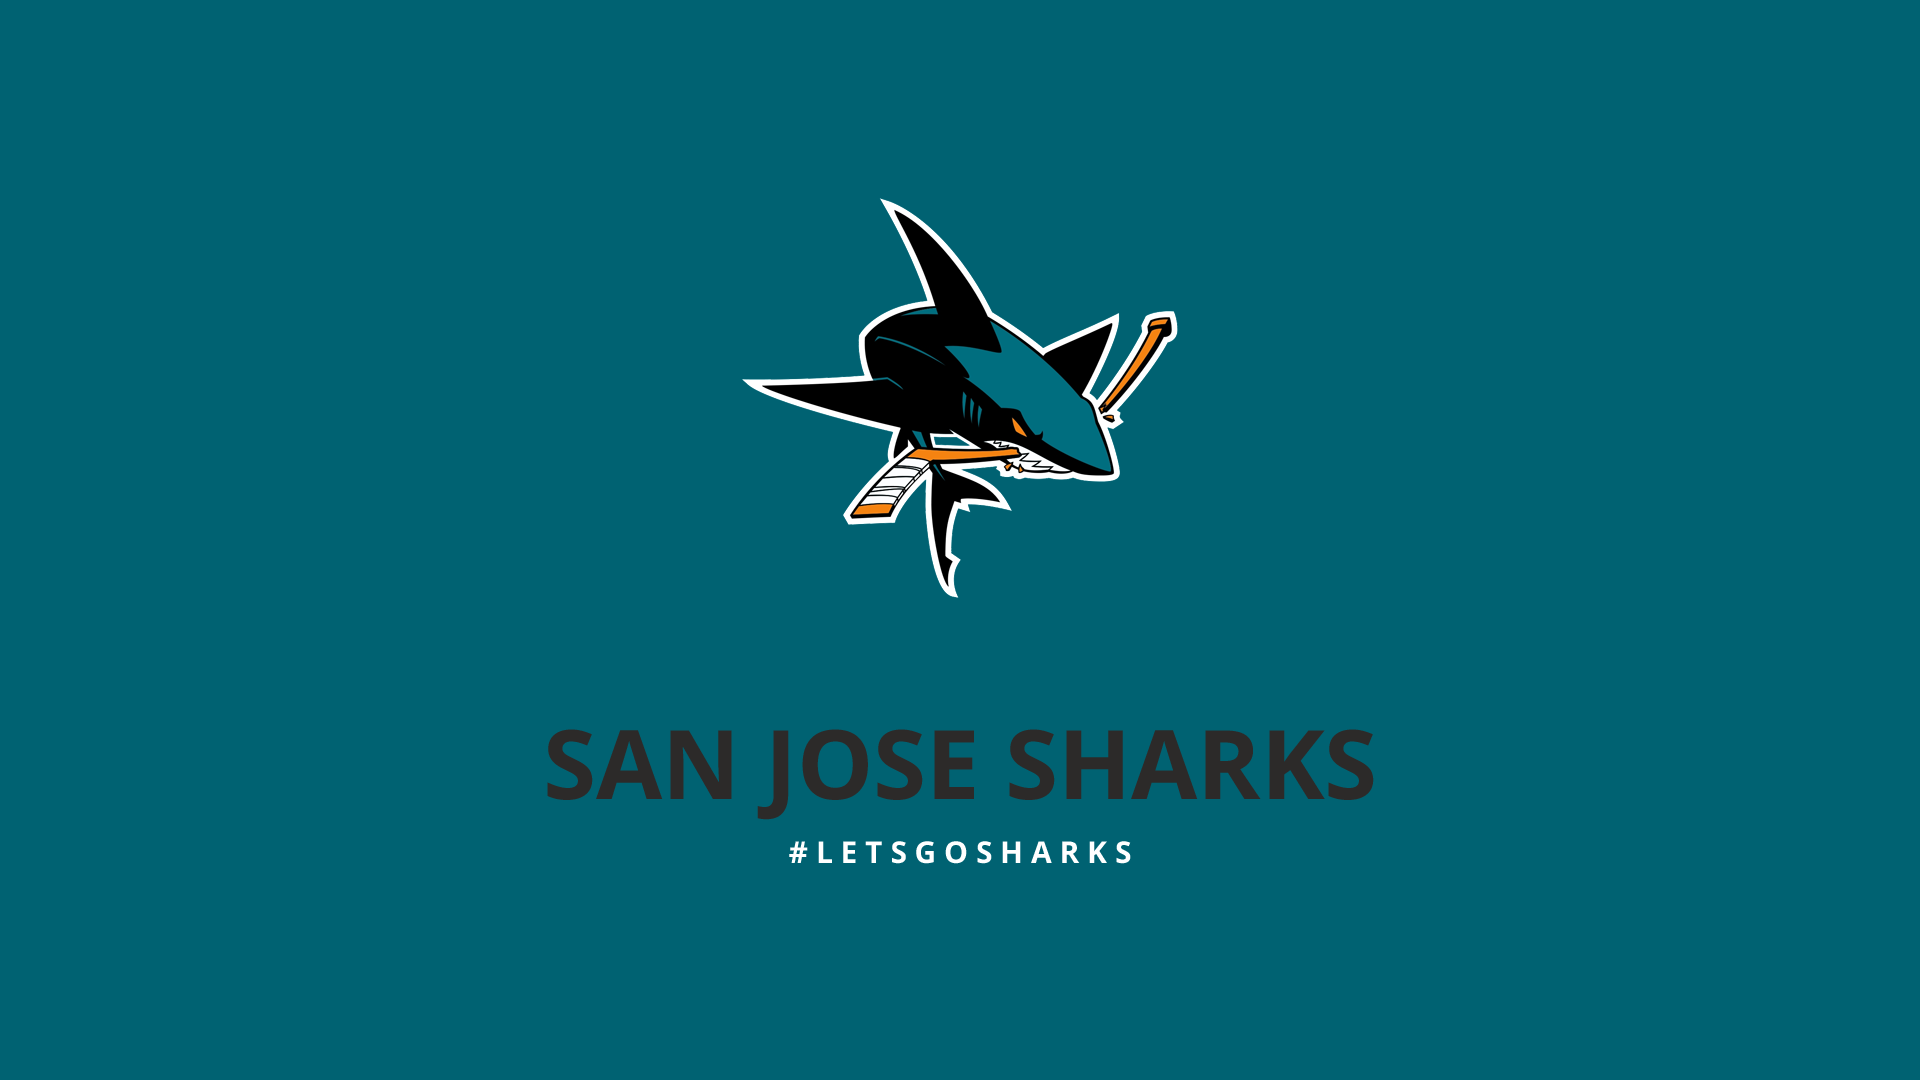 Minimalist San Jose Sharks wallpaper by lfiore on